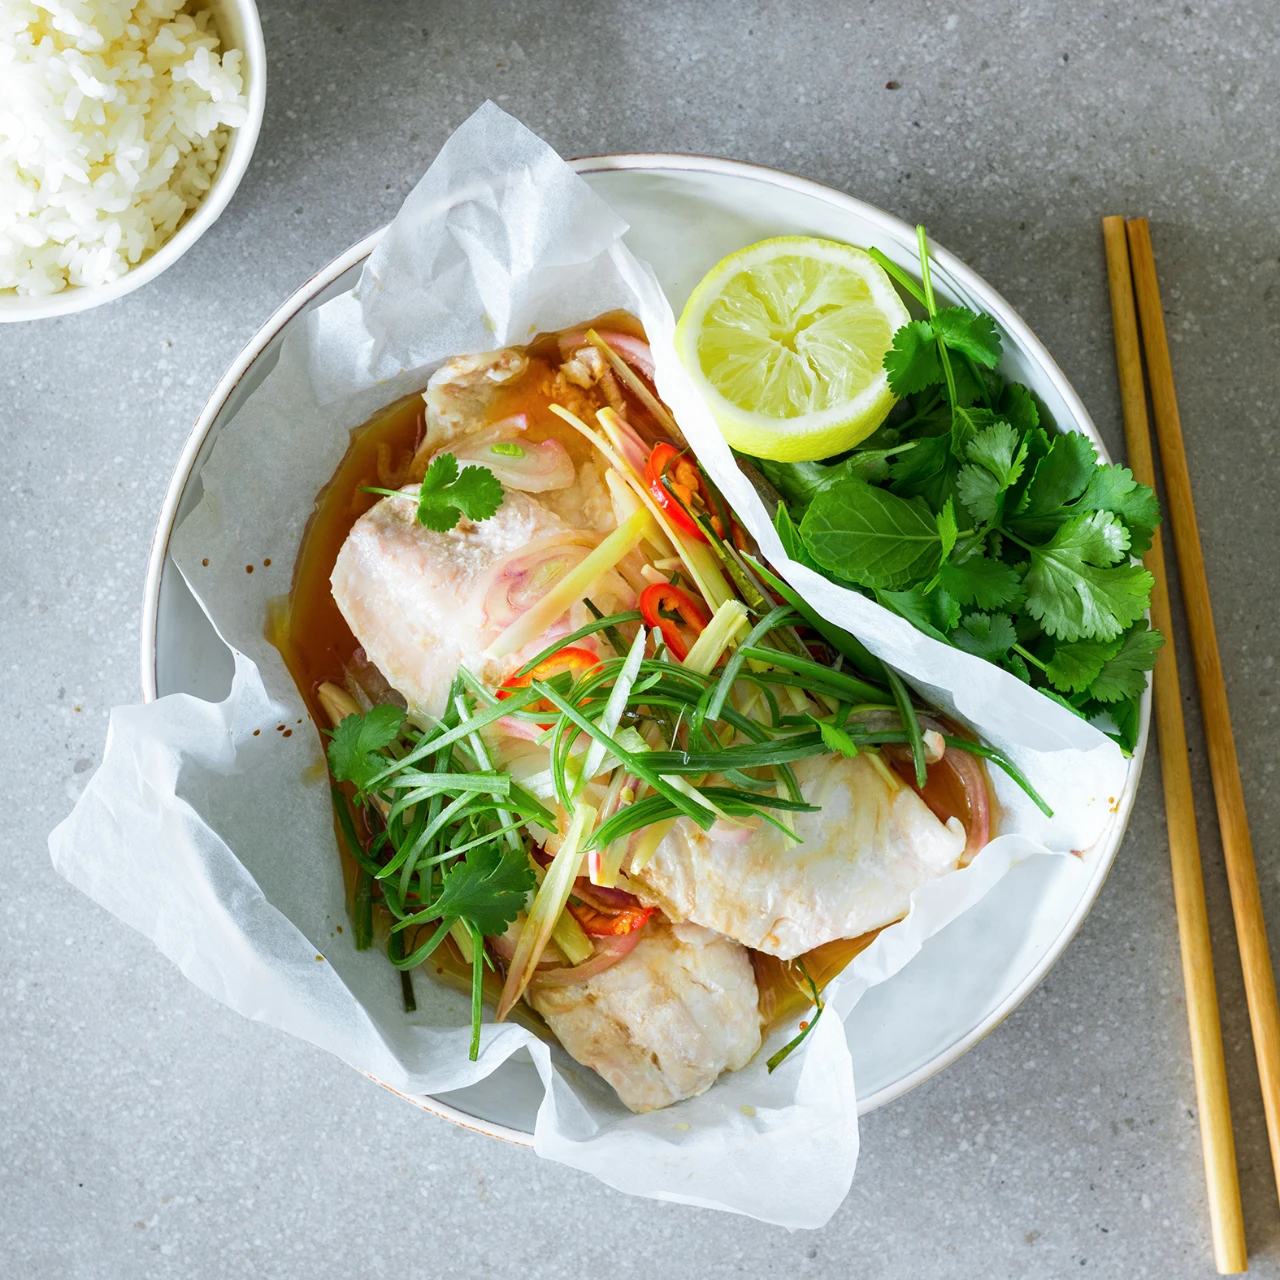 Make our easy Asian-inspired Steamed Fish Parcel Recipe with lemongrass and ginger. Use Snapper, Tarakihi or Gurnard fish.